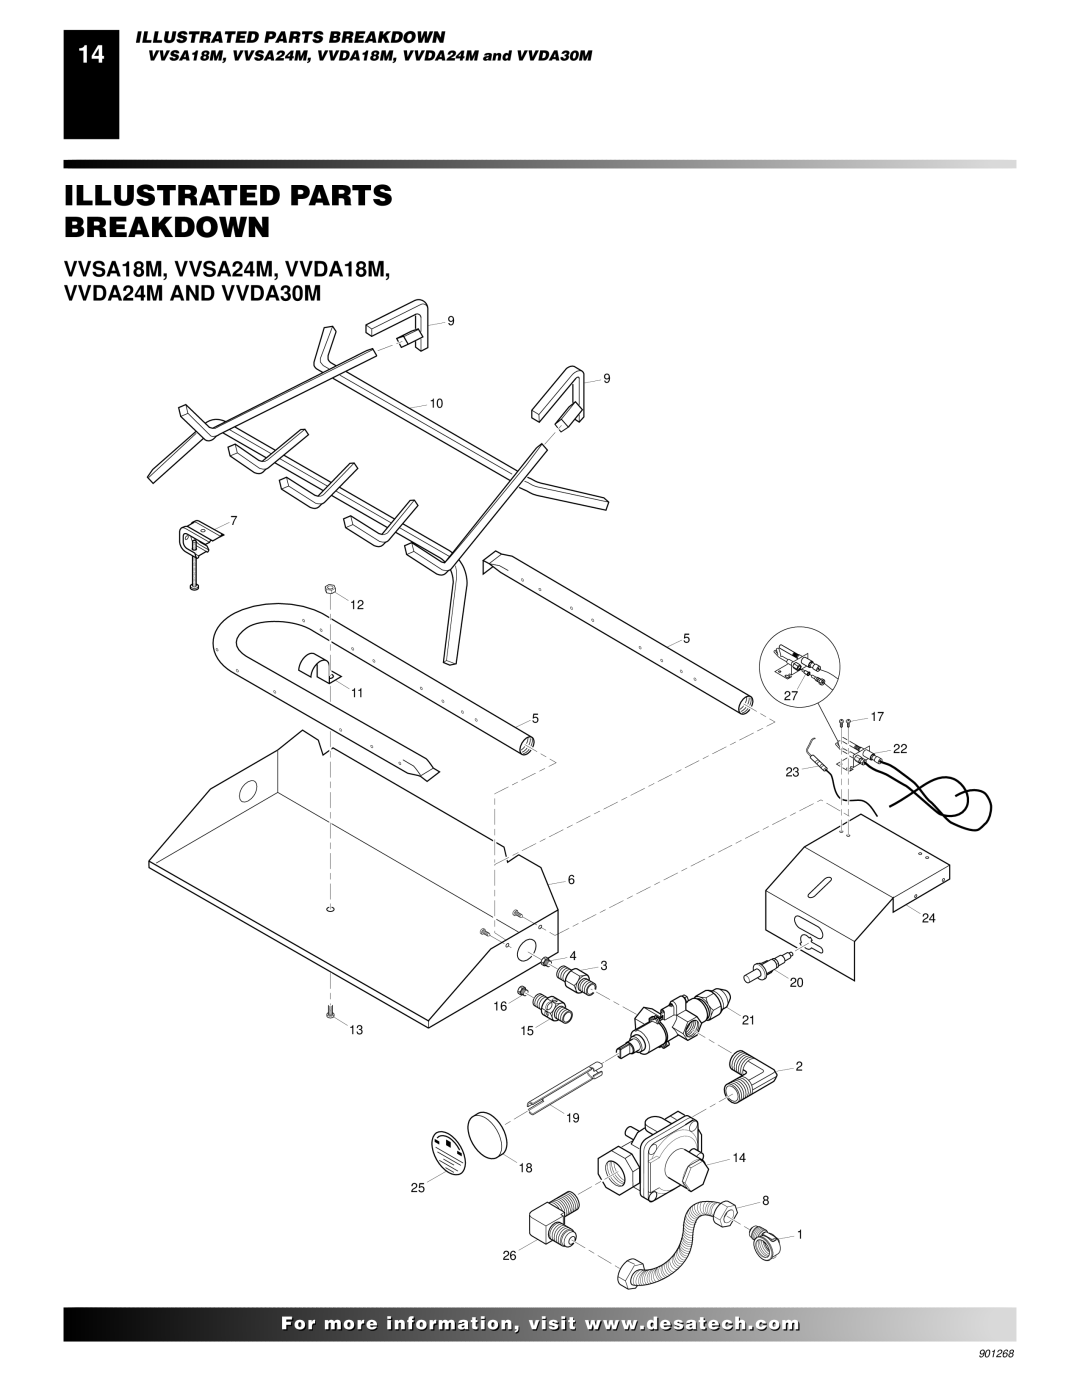 Desa installation manual Illustrated Parts Breakdown, VVSA18M, VVSA24M, VVDA18M VVDA24M and VVDA30M 